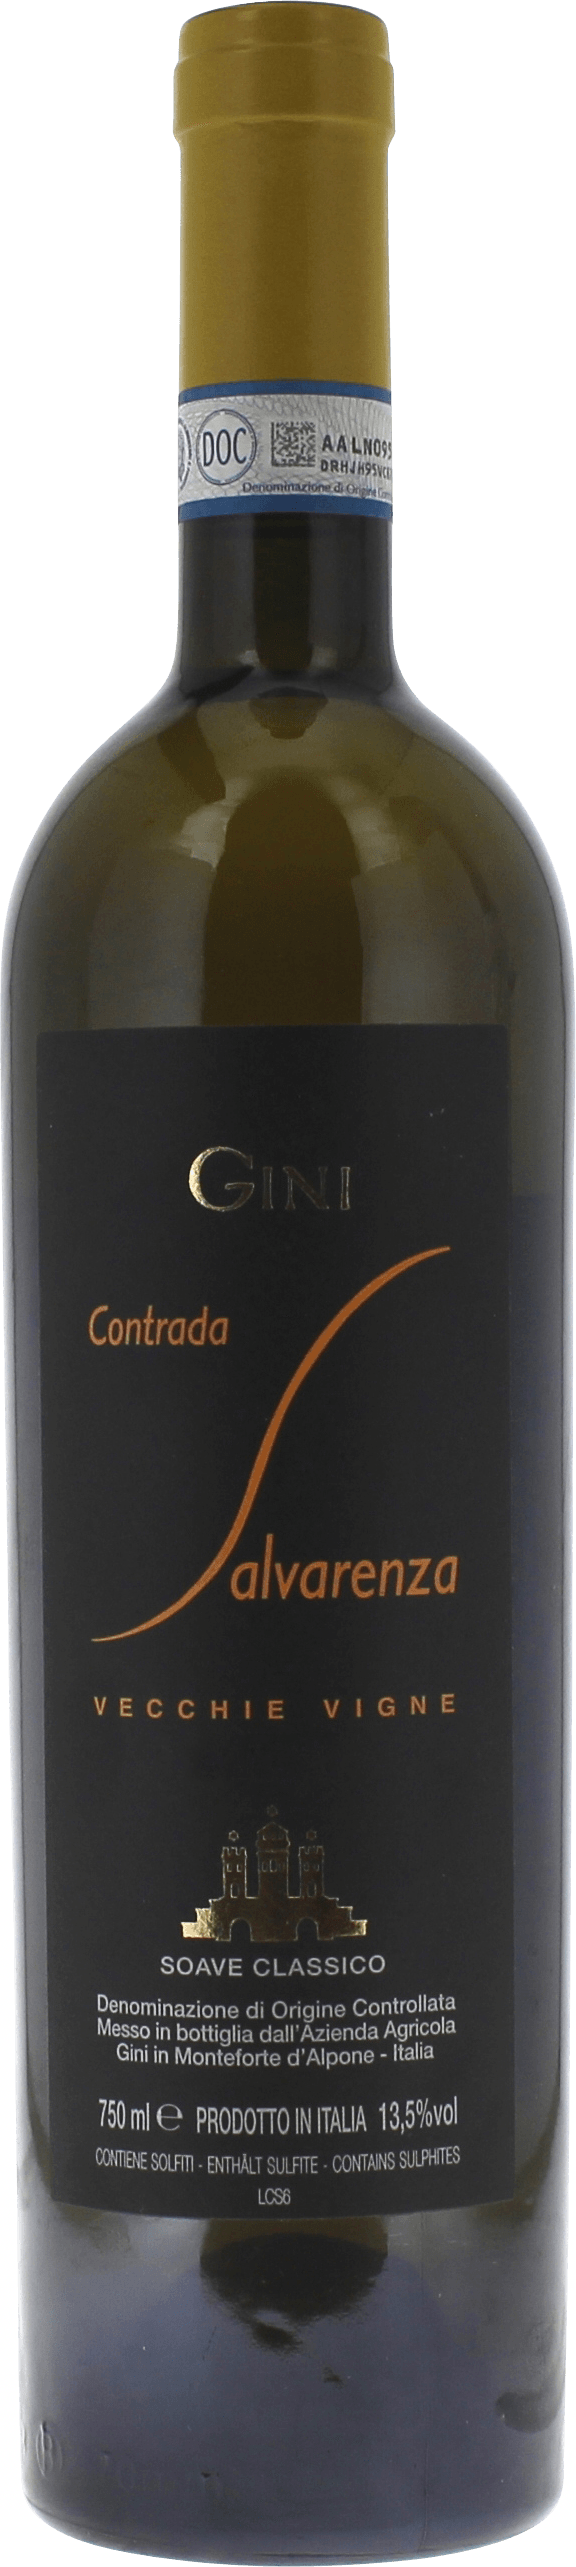 Gini - contrada salvarenza garganega - soave classico 2012  , Vin italien